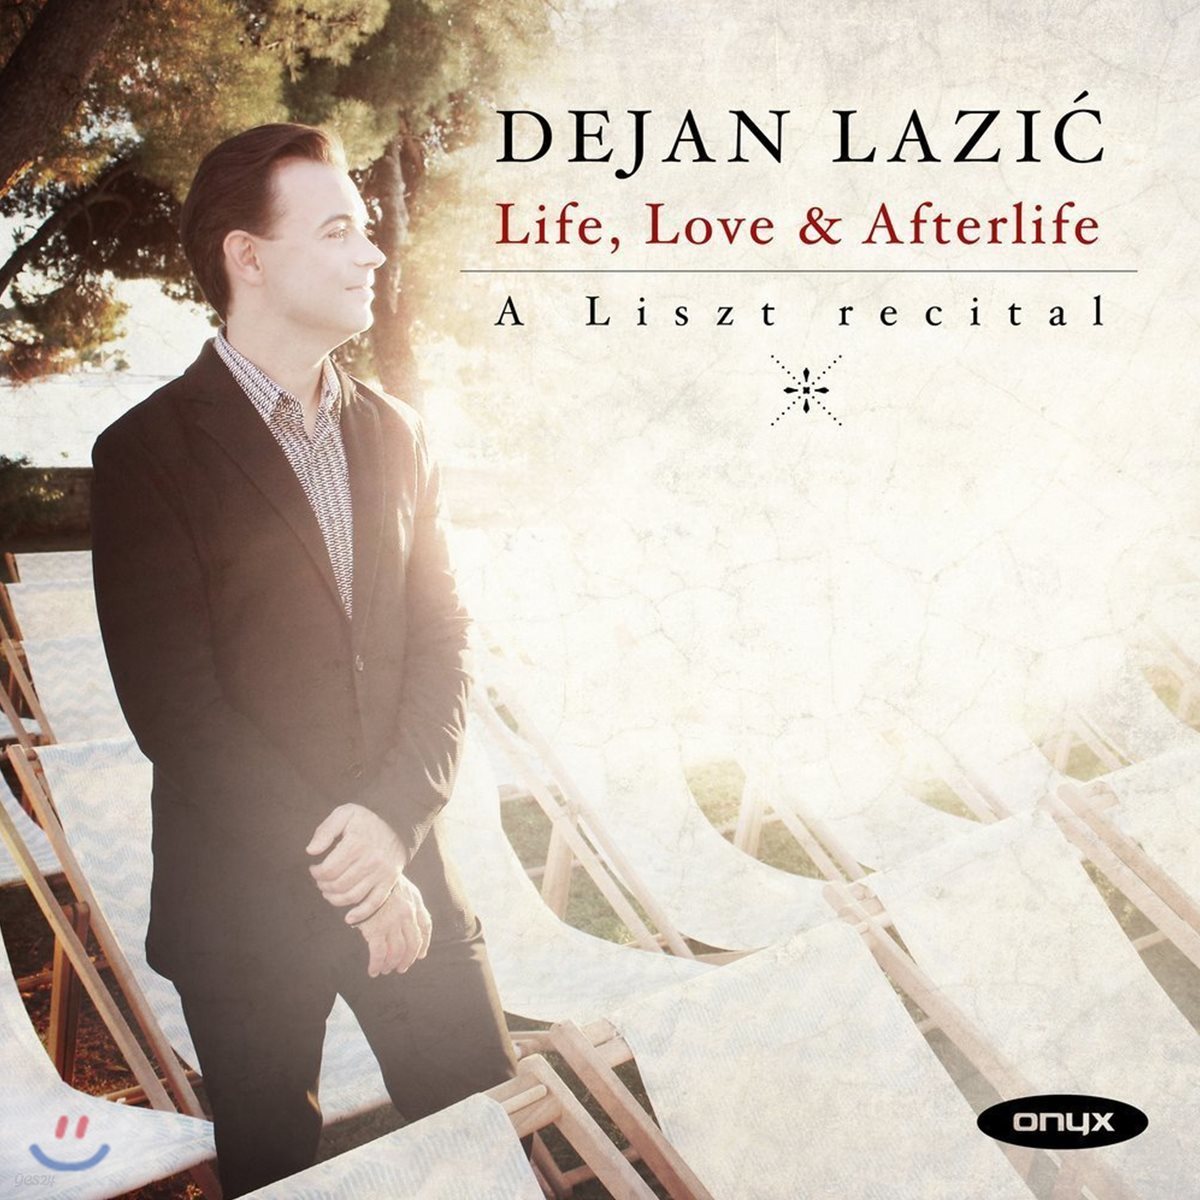 Dejan Lazic 리스트 리사이틀: 헝가리 랩소디 18번, 베네치아와 나폴리, 슈베르트/ 바그너/ 모차르트 편곡 등 - 데얀 라지치 (Life, Love &amp; Afterlife - A Liszt Recital)